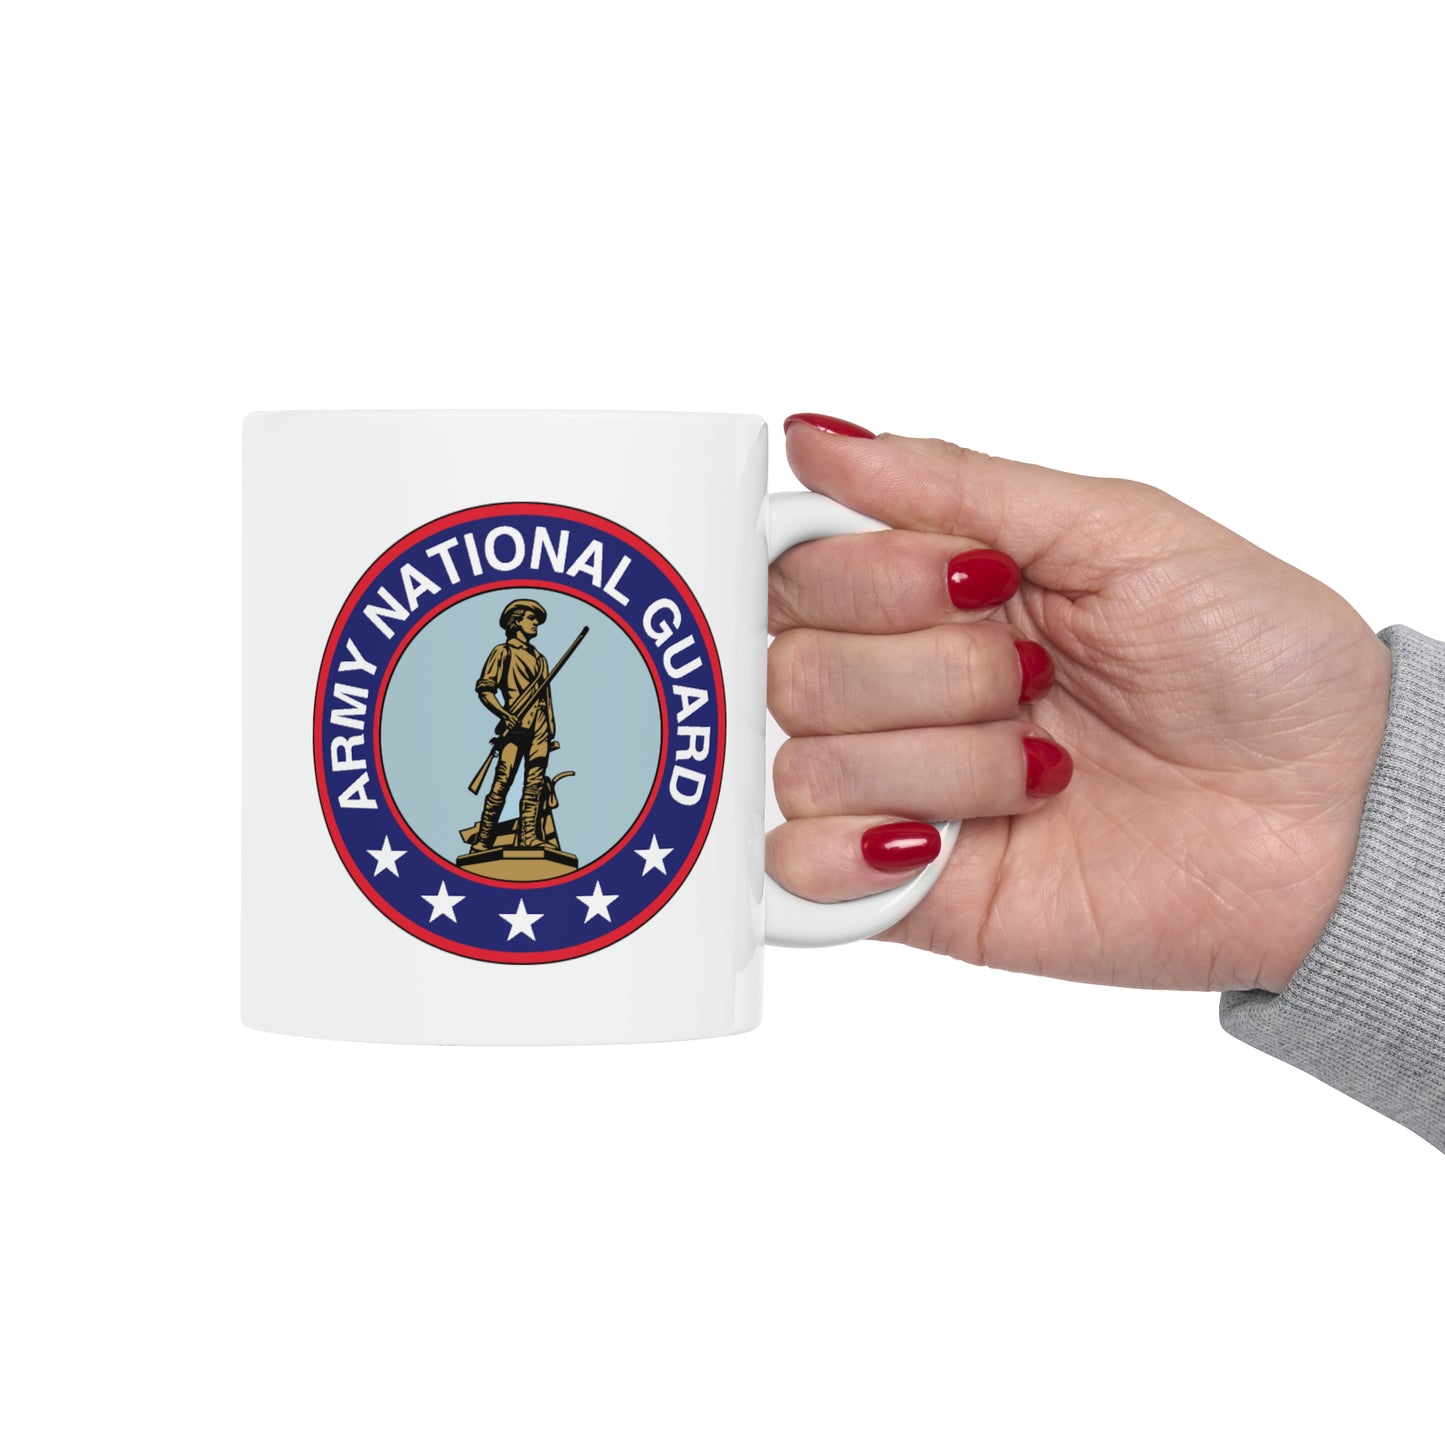 Army National Guard Coffee Mug - Double Sided White Ceramic 11oz by TheGlassyLass.com